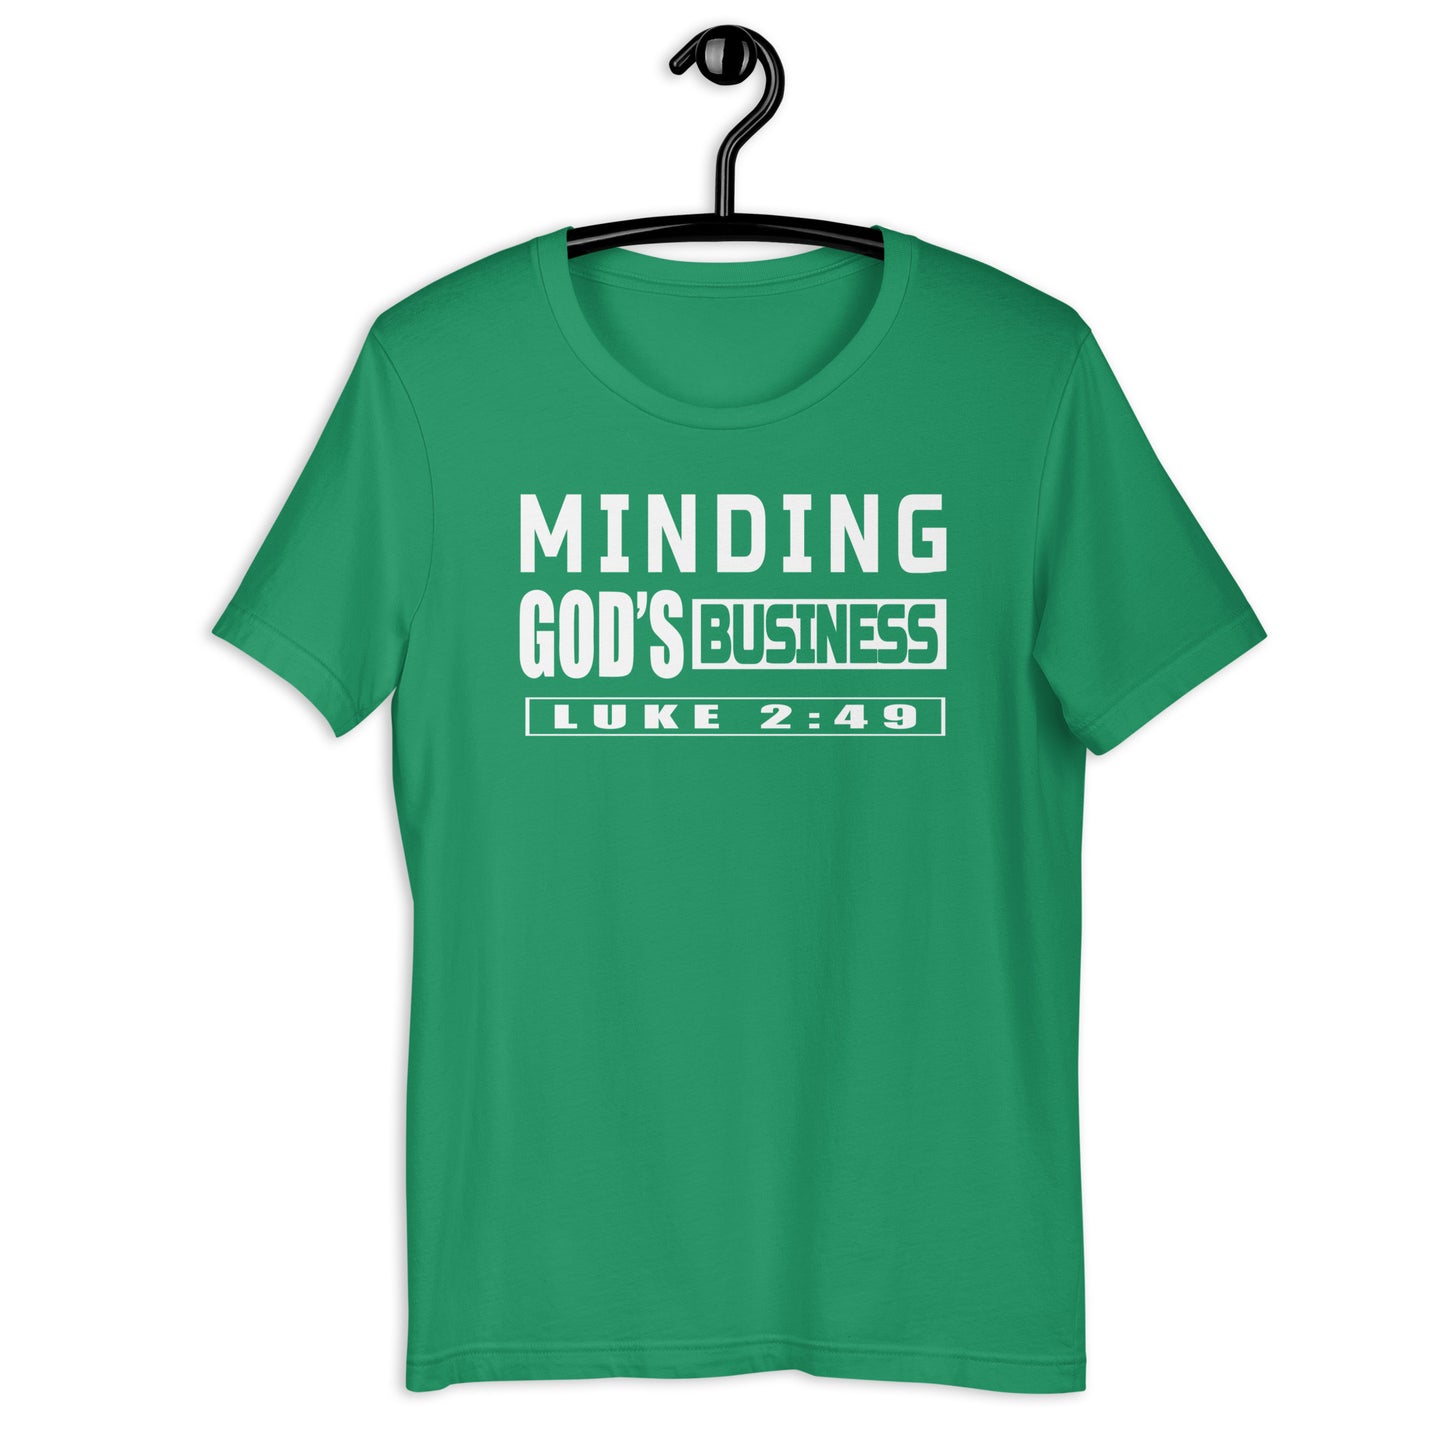 Minding God’s Business T-Shirt Various Colors